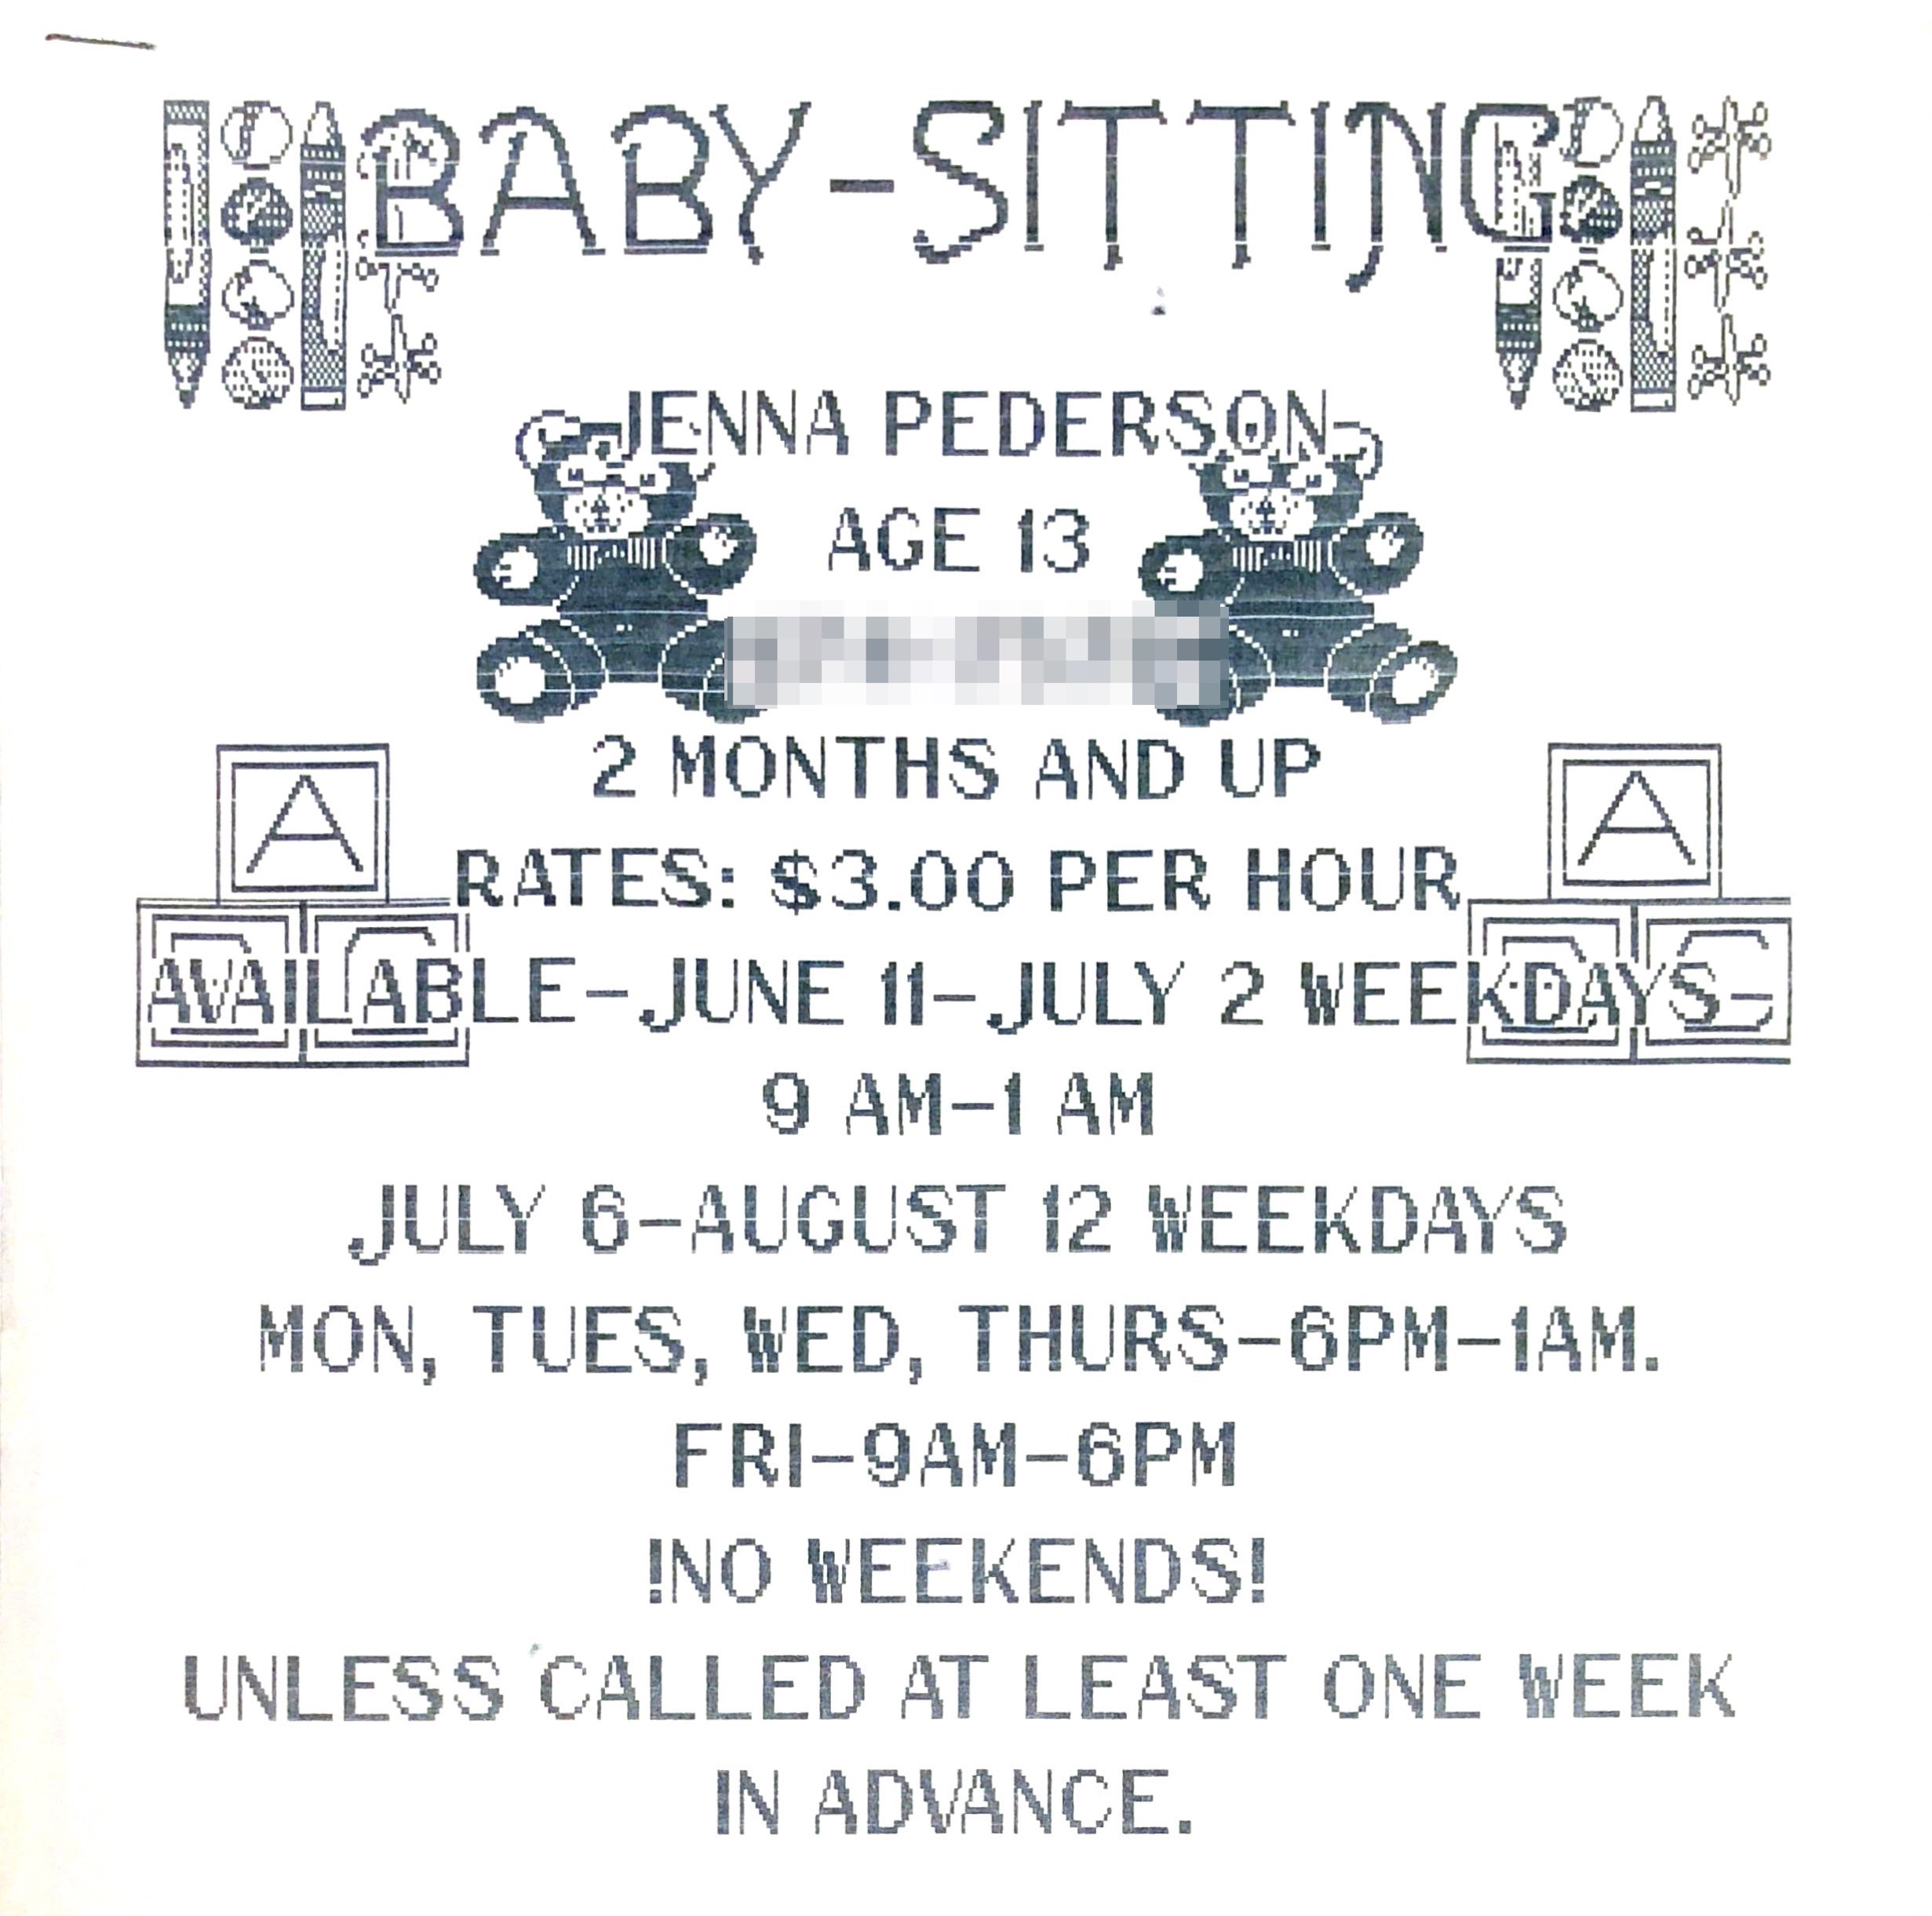 Babysitting Business Flyer